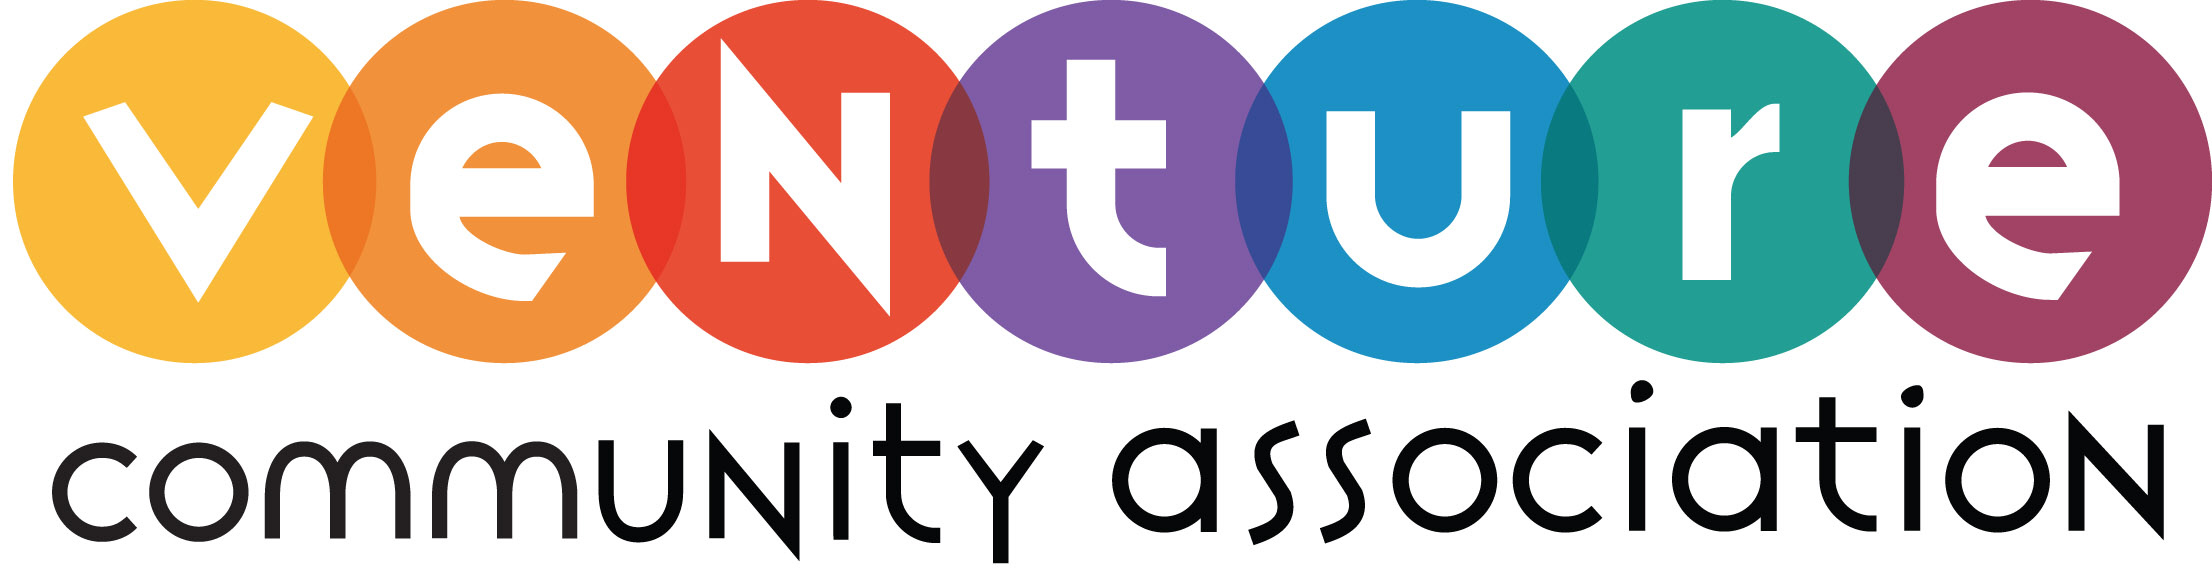 logo for Venture Community Association